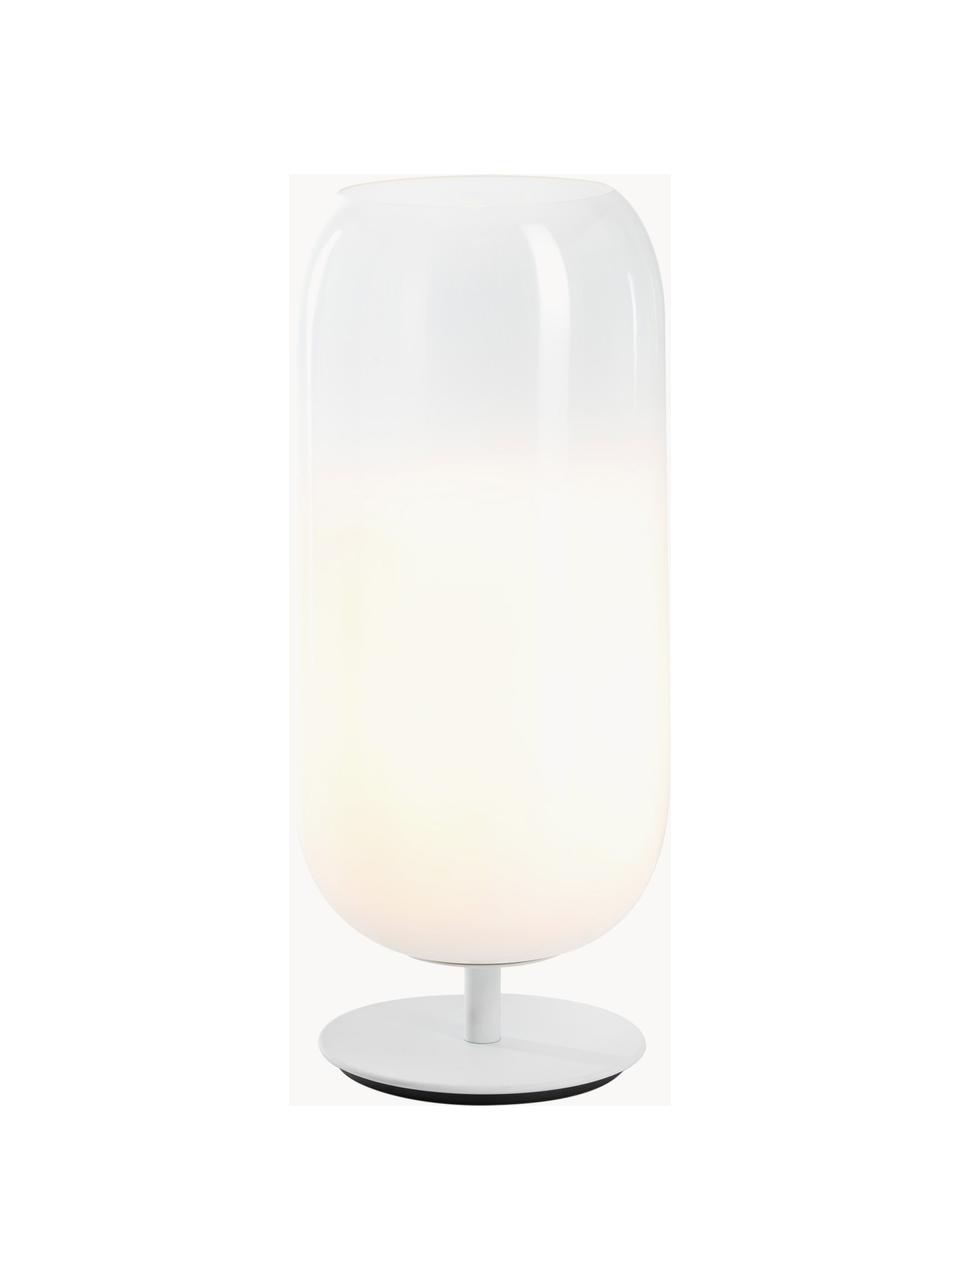 Mondgeblazen tafellamp Gople, verschillende formaten, Lampenkap: mondgeblazen glas, Wit, Ø 21 x H 49 cm